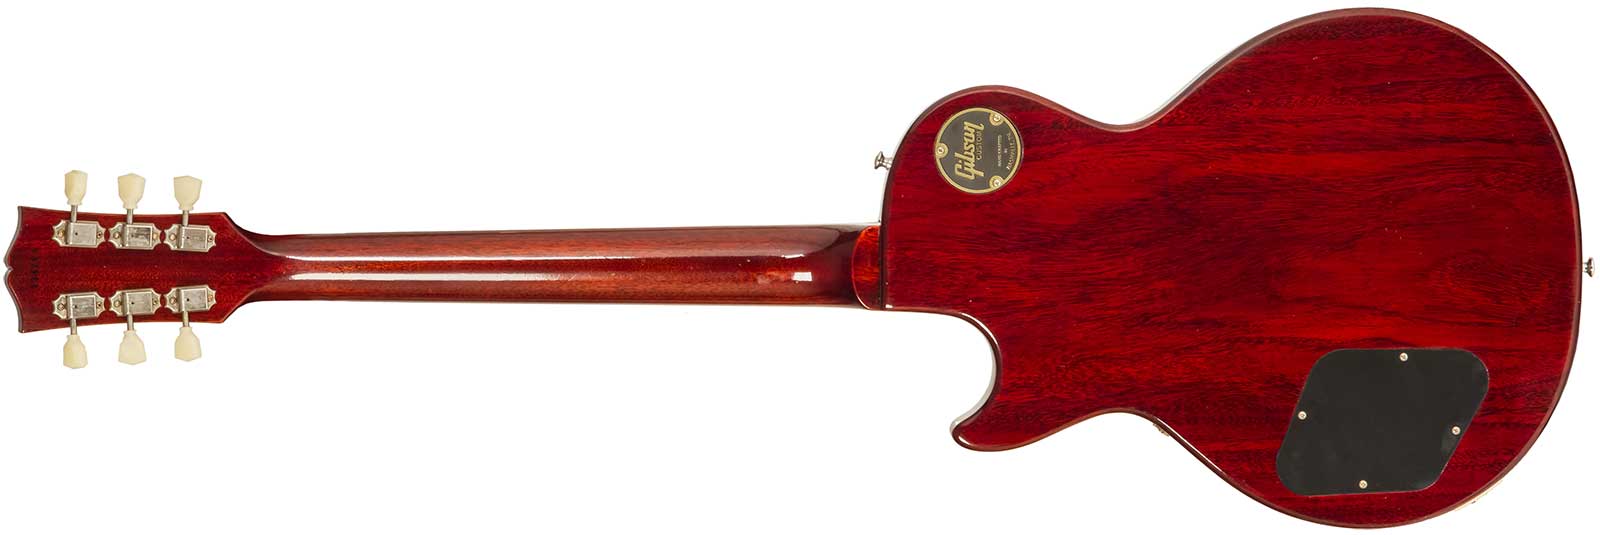 Gibson Custom Shop M2m Les Paul Standard 1959 Reissue 2h Ht Rw #934264 - Murphy Lab Ultra Light Aged Factory Burst - Enkel gesneden elektrische gitaar